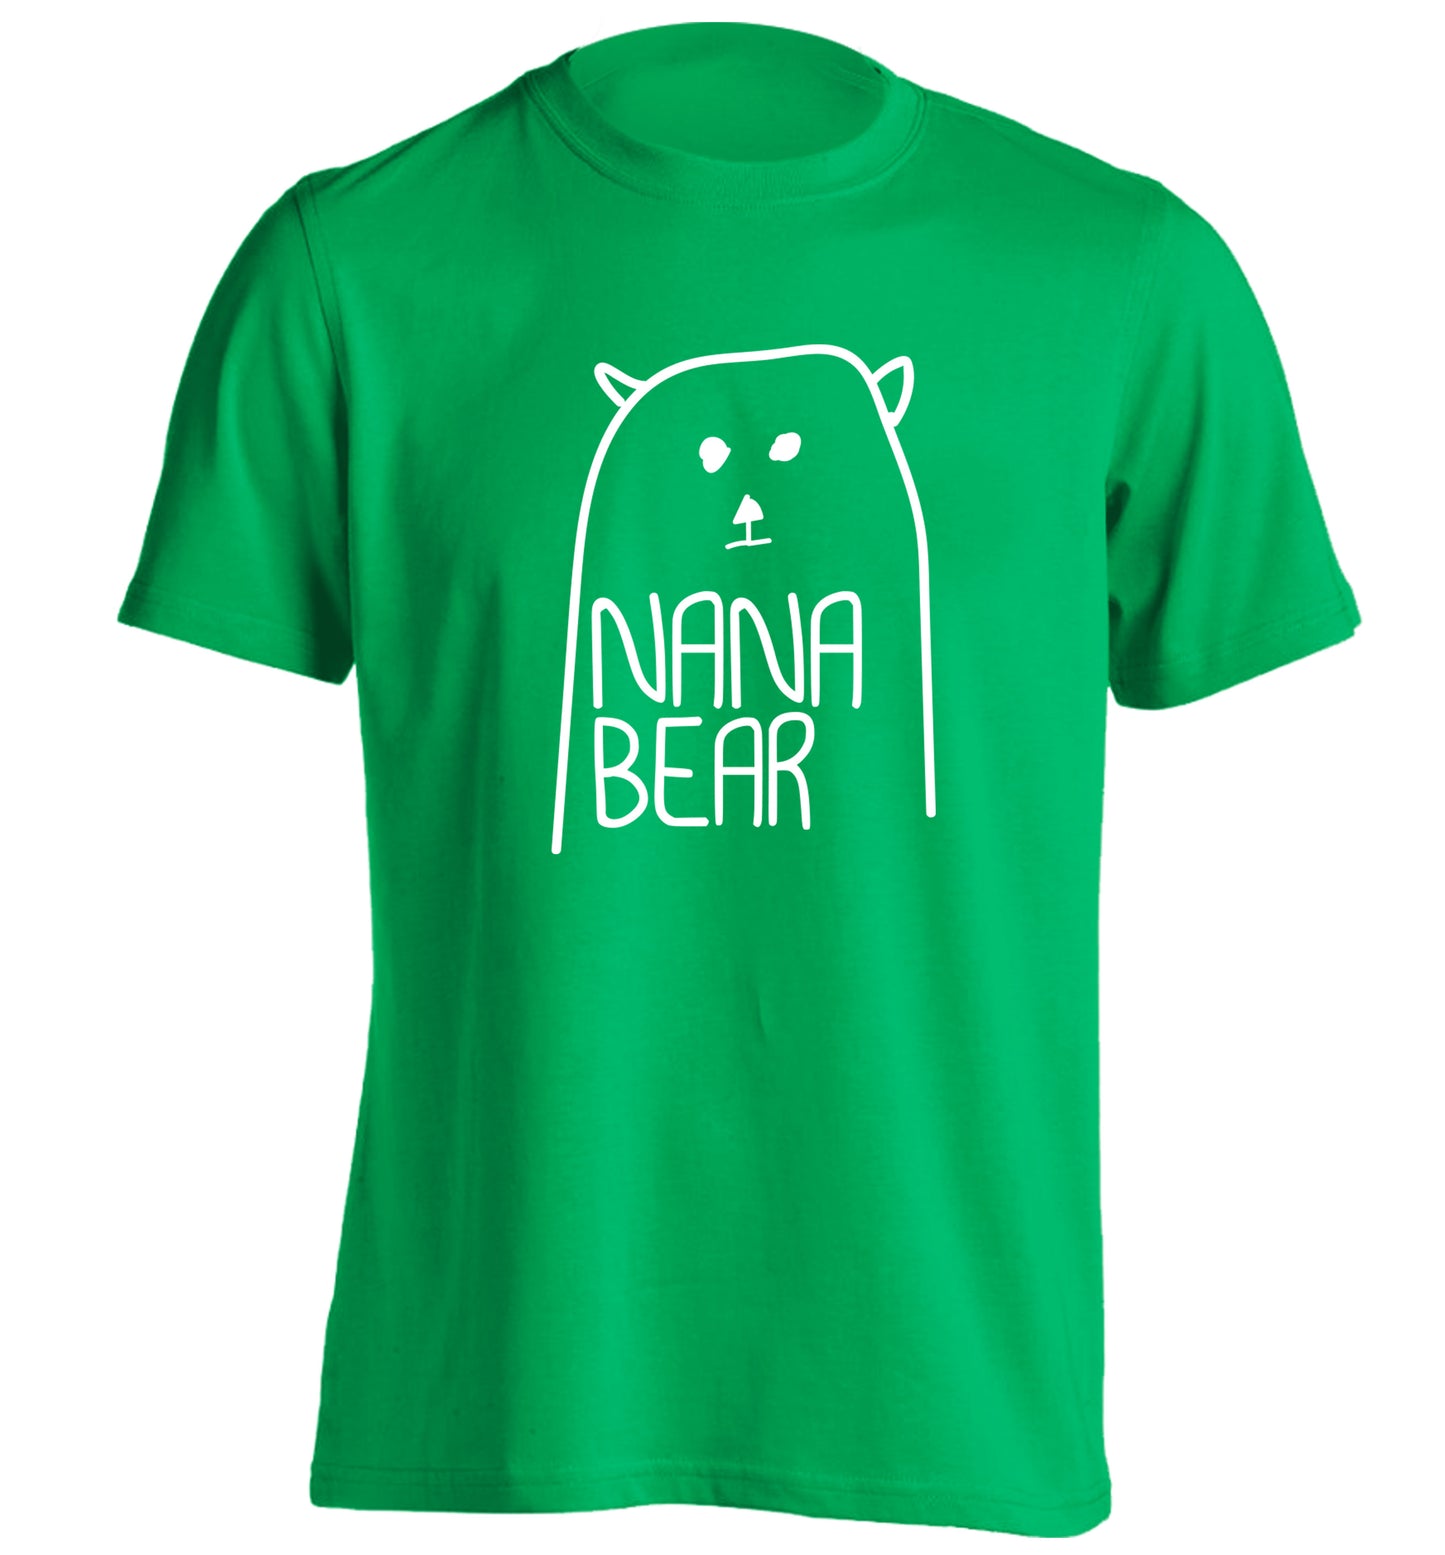 Nana bear adults unisex green Tshirt 2XL